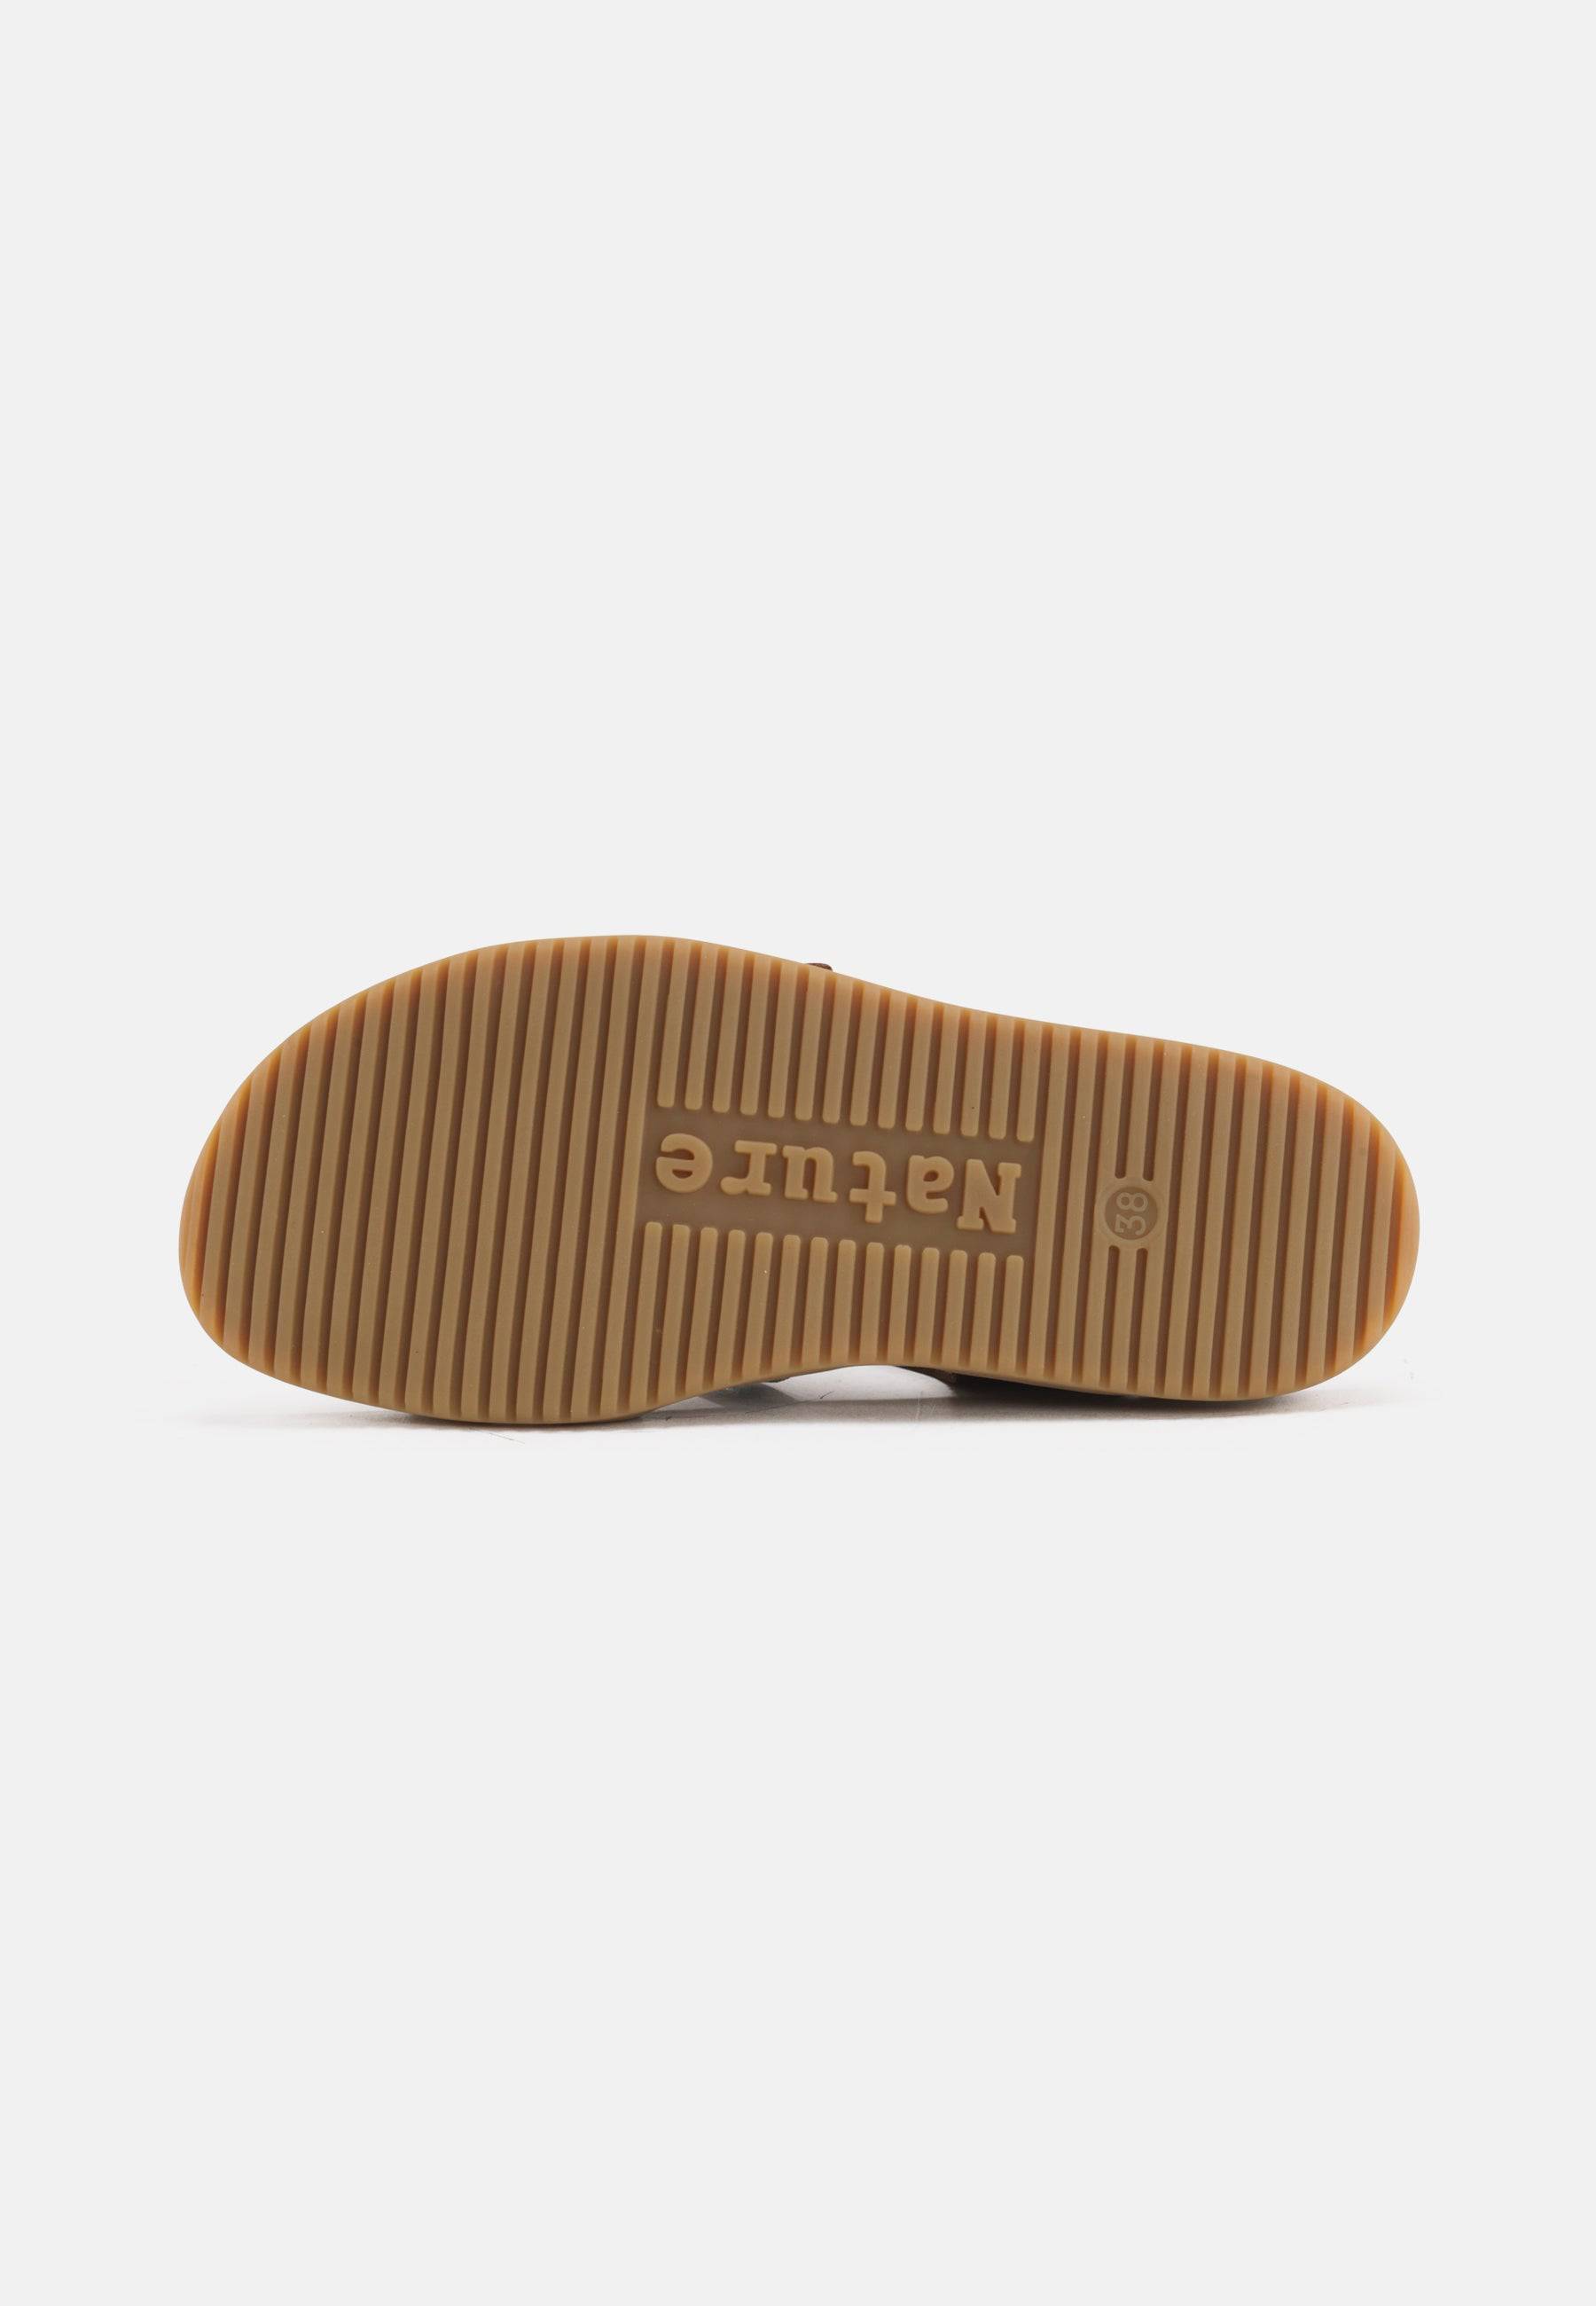 Mette Sandal Leather - Coffee - Nature Footwear